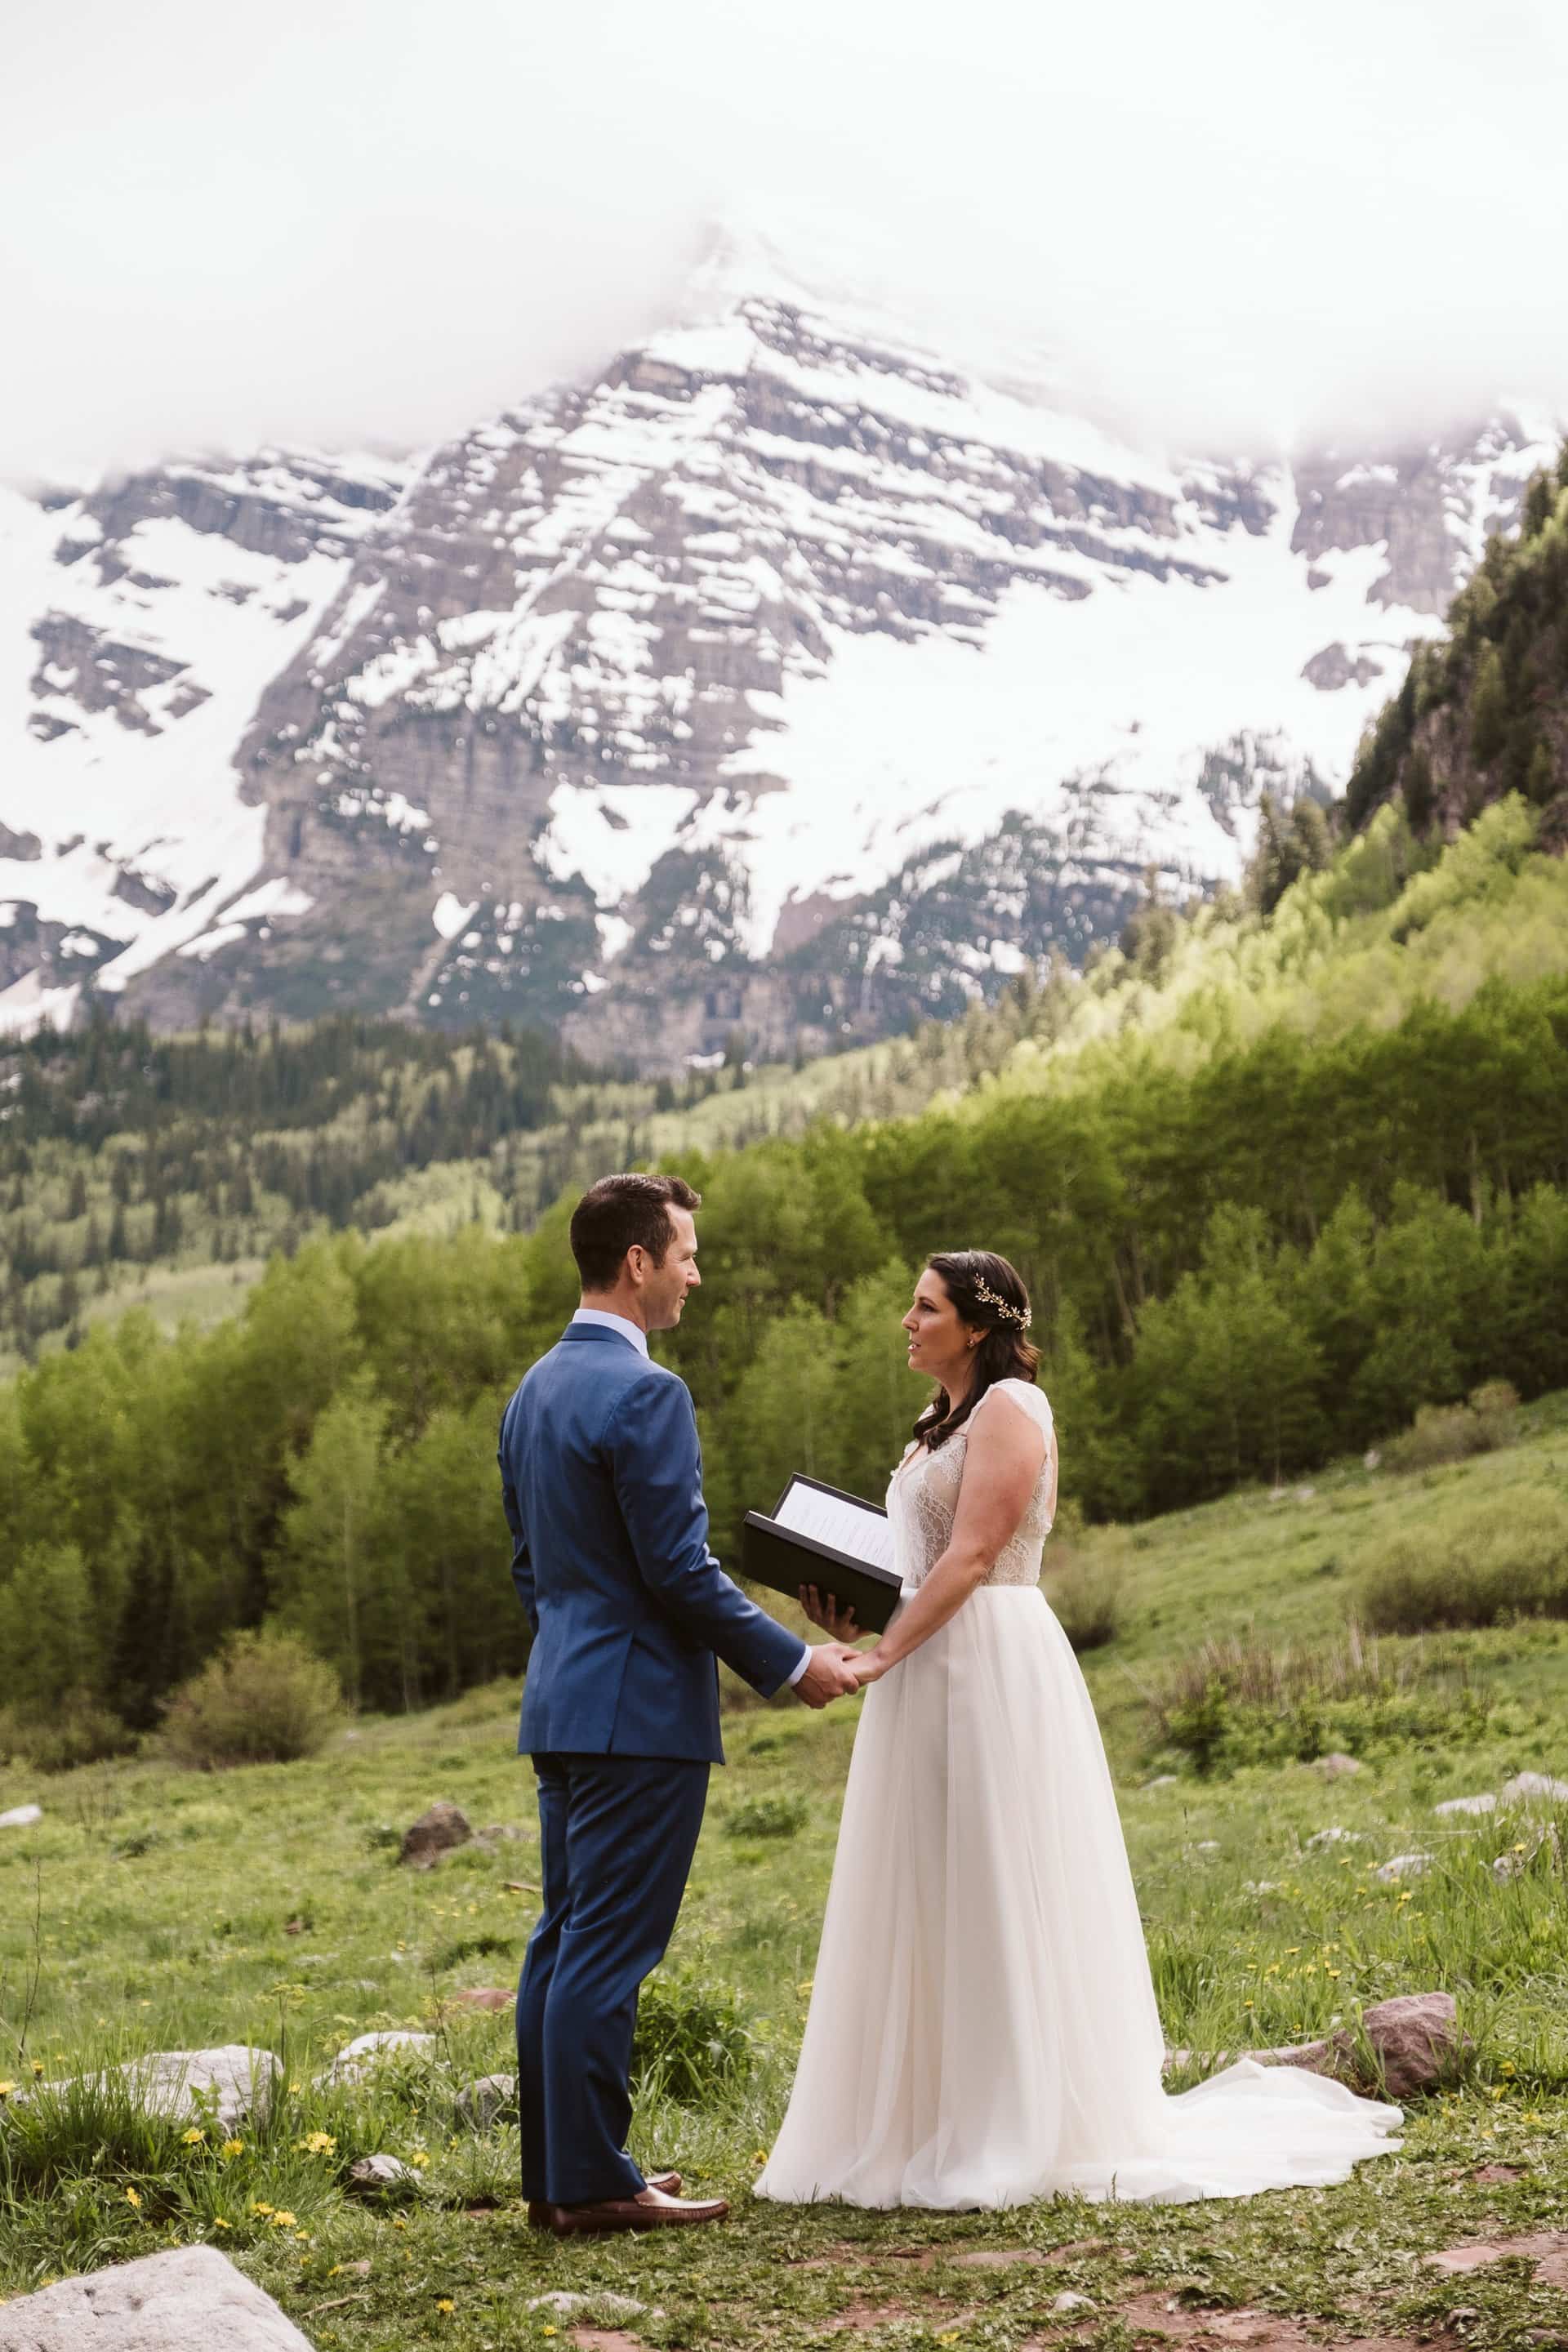 Colorado elopement at Maroon Bells in Aspen